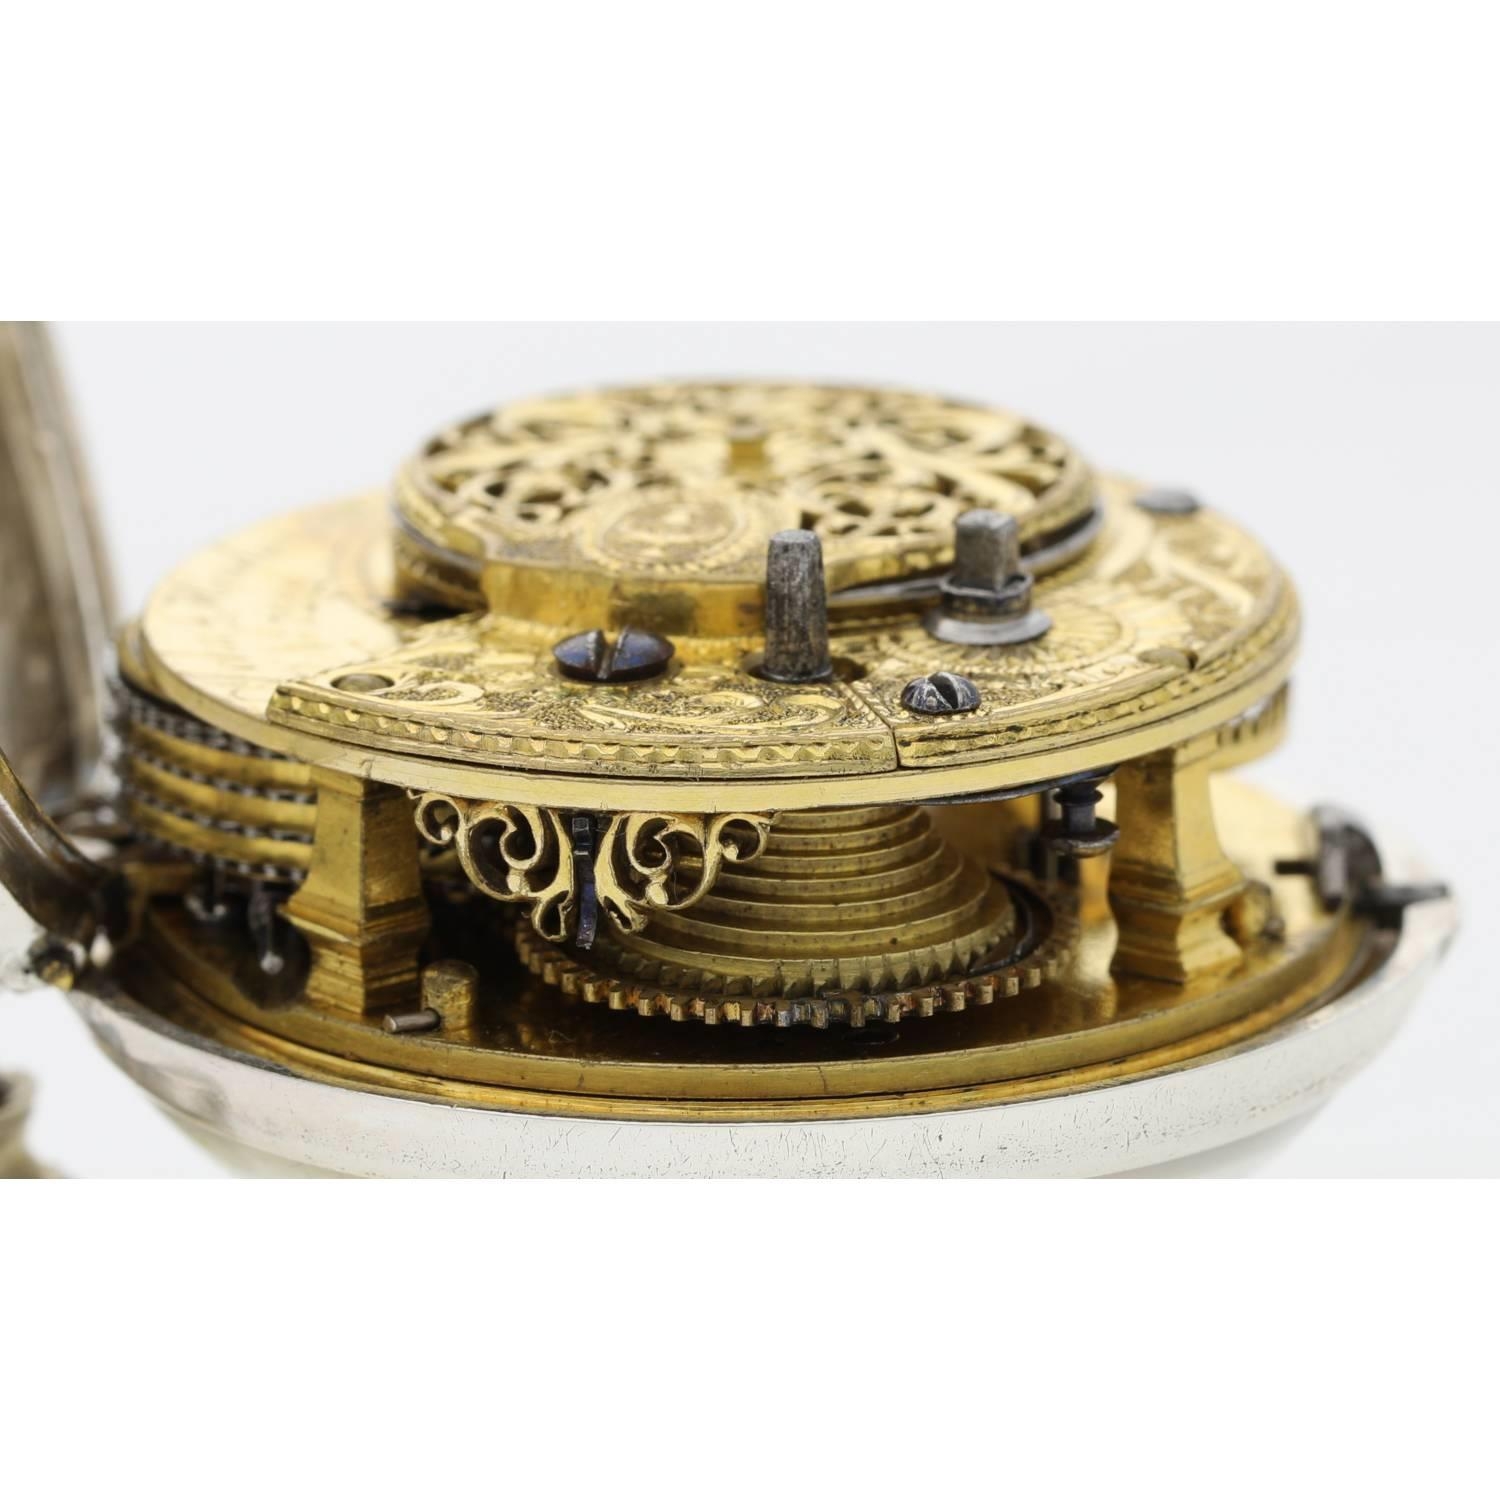 John Hondun, London - English 18th century silver pair cased verge pocket watch, London 1780, signed - Image 5 of 10